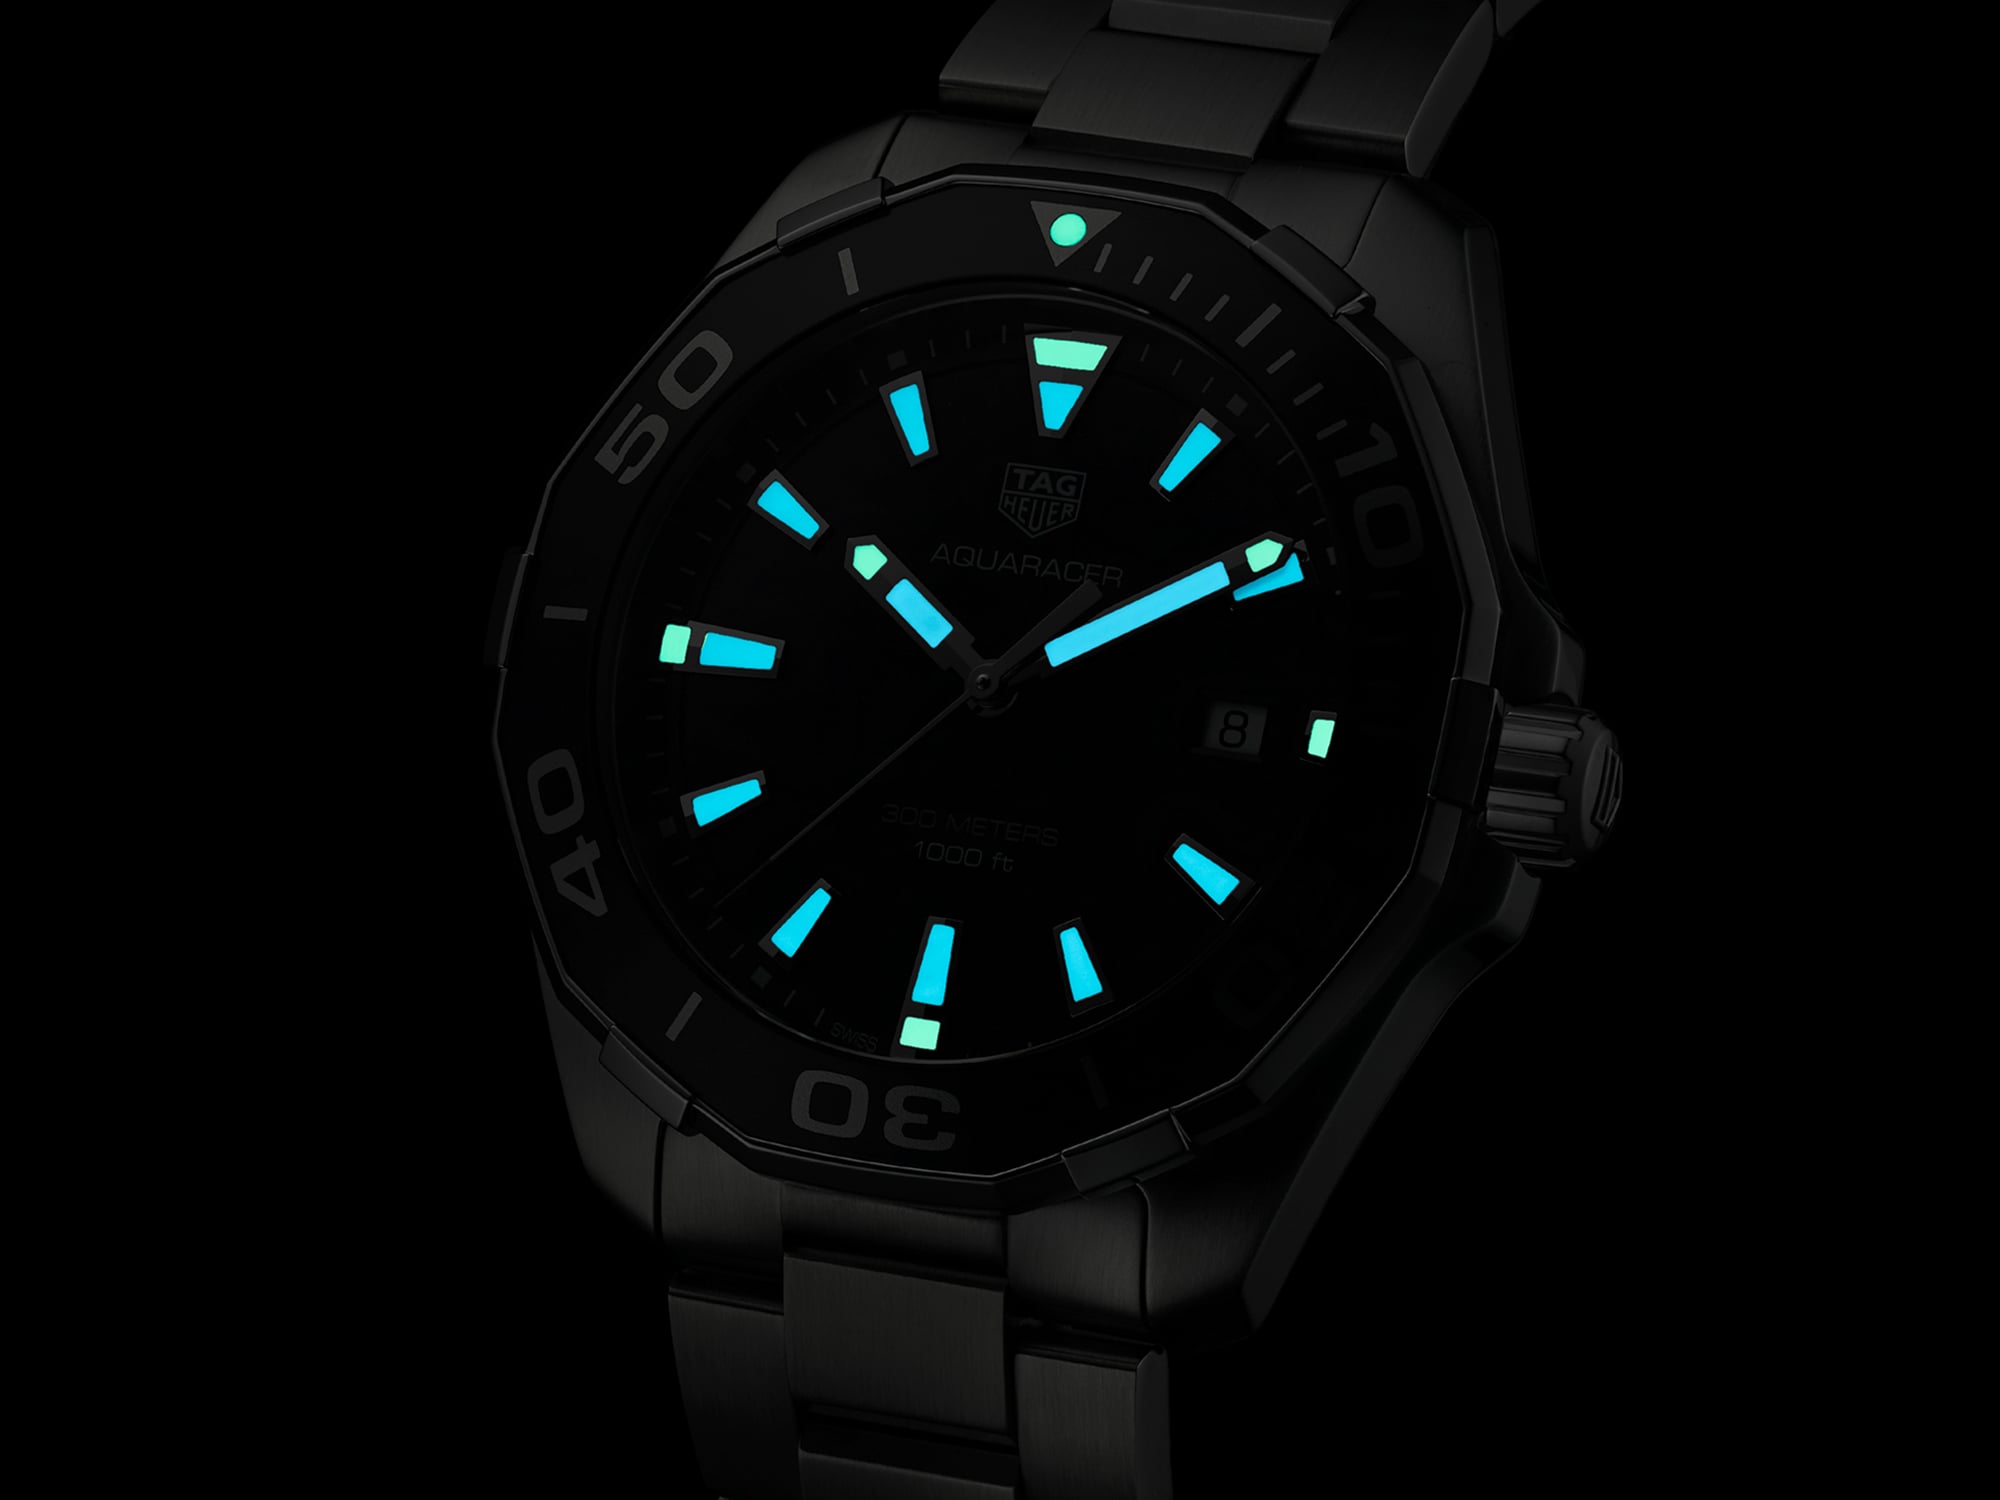 TAG Heuer Aquaracer Wristwatch